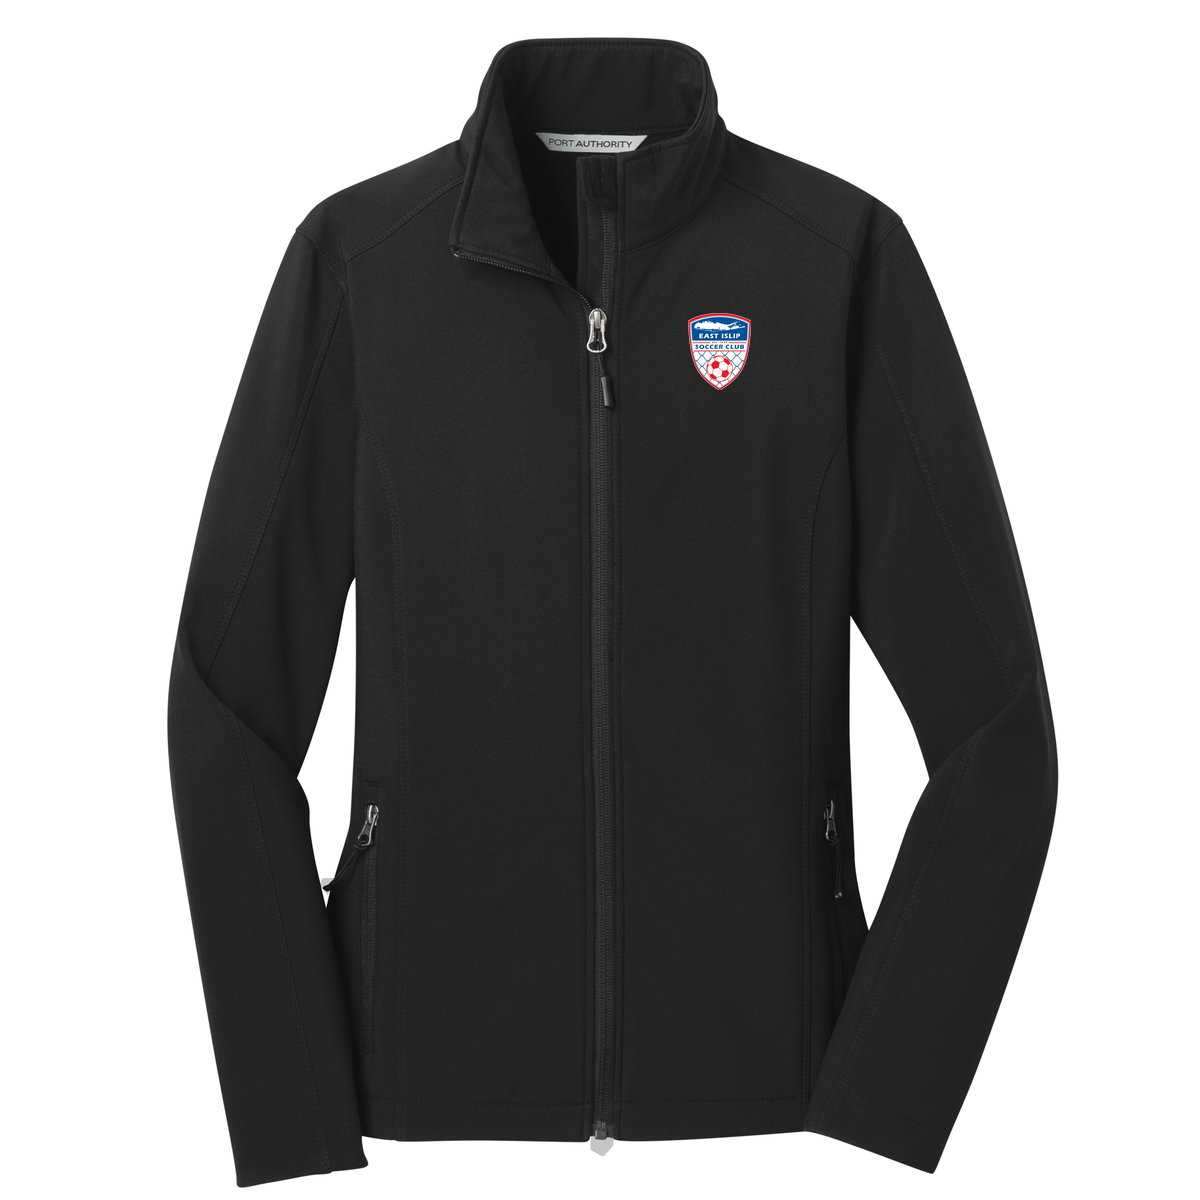 East Islip Soccer Club Women's Soft Shell Jacket